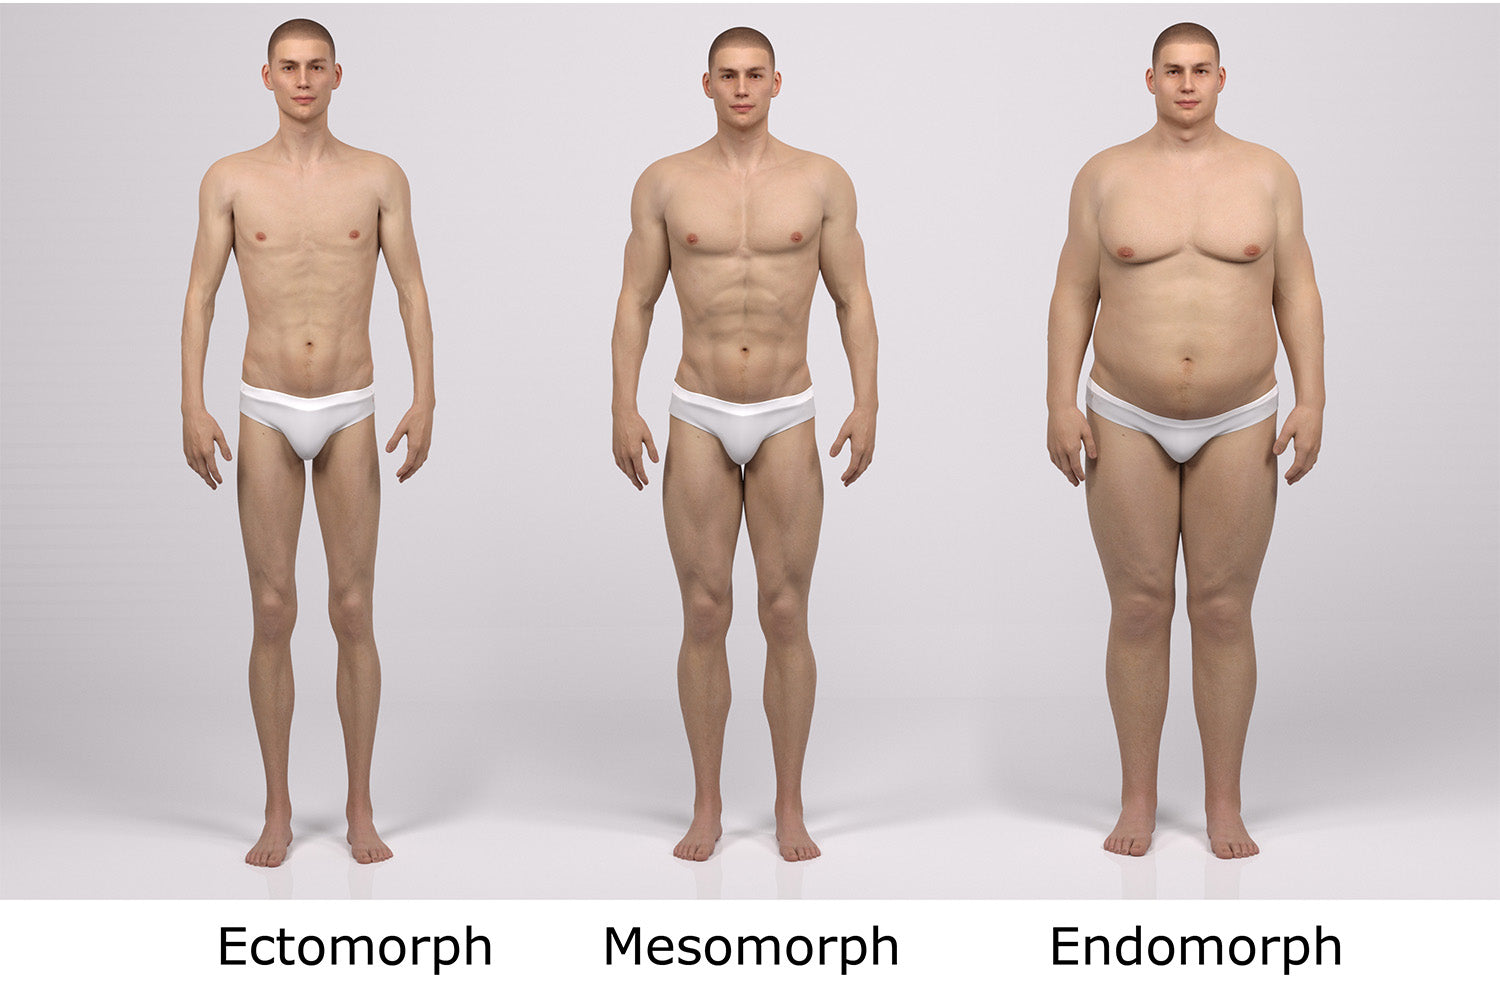 Train for your body shape: The Endomorph